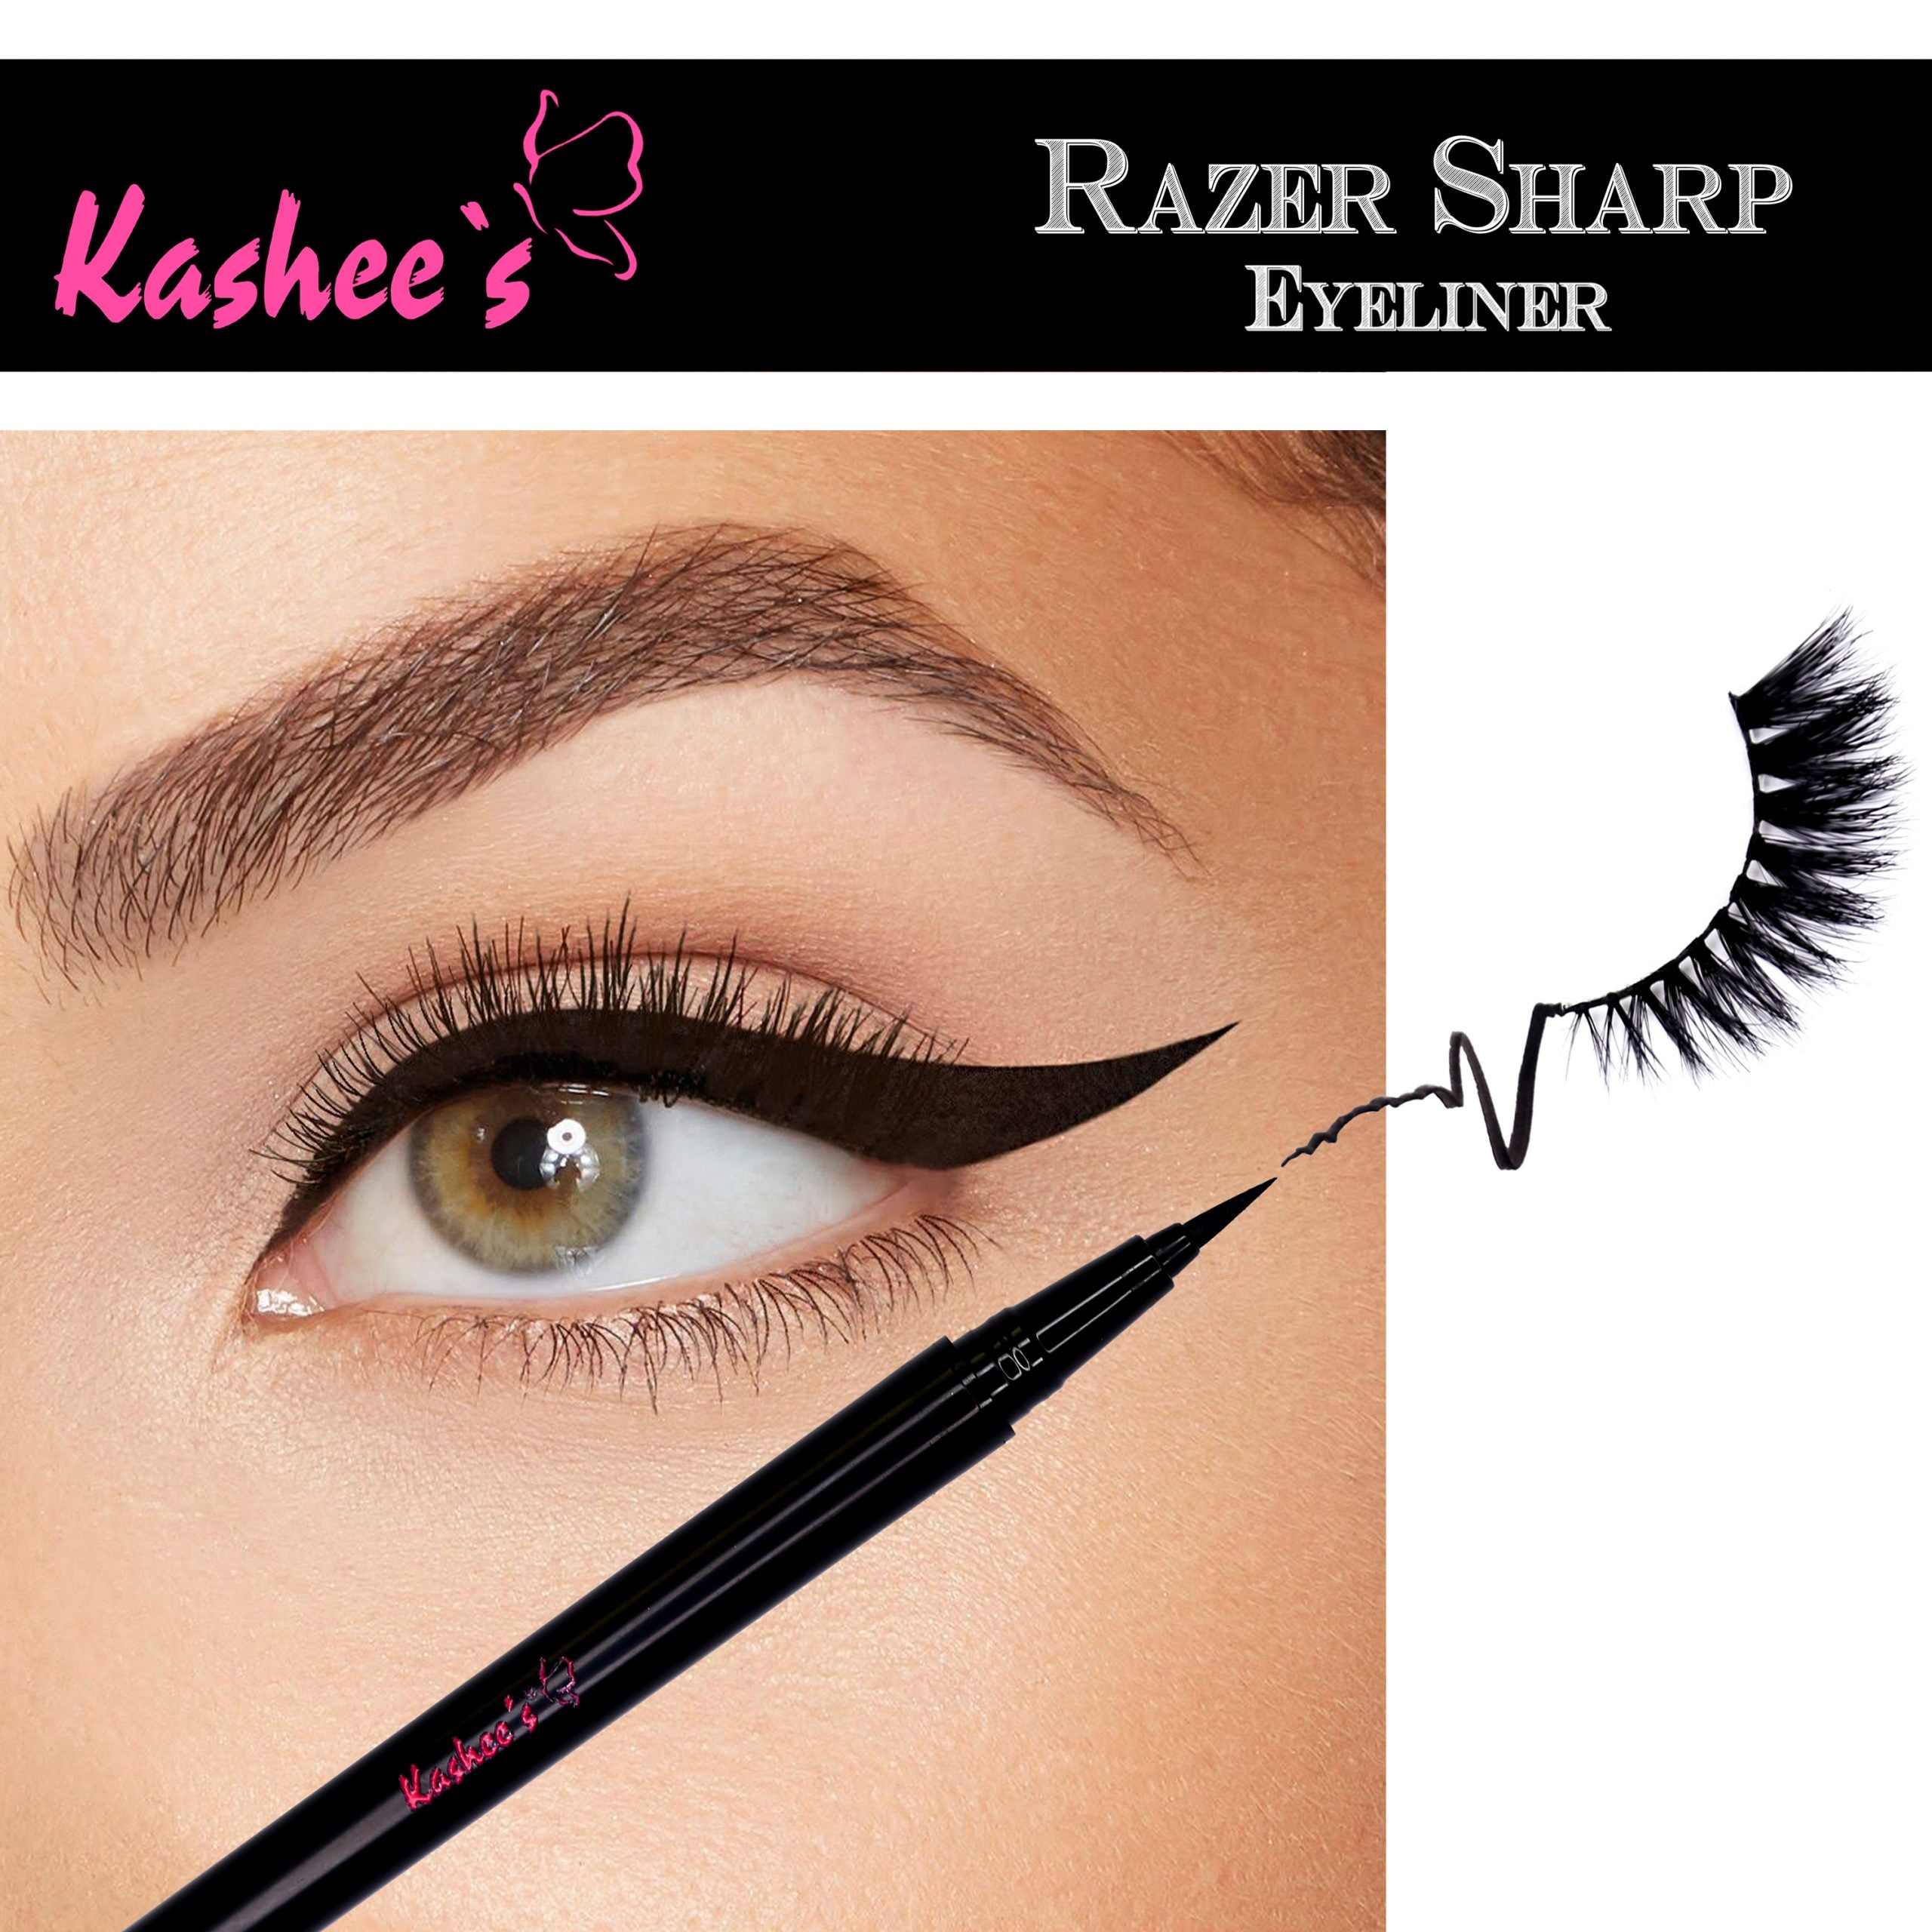 Kashee's Razer Sharp Waterproof Pen Eyeliner